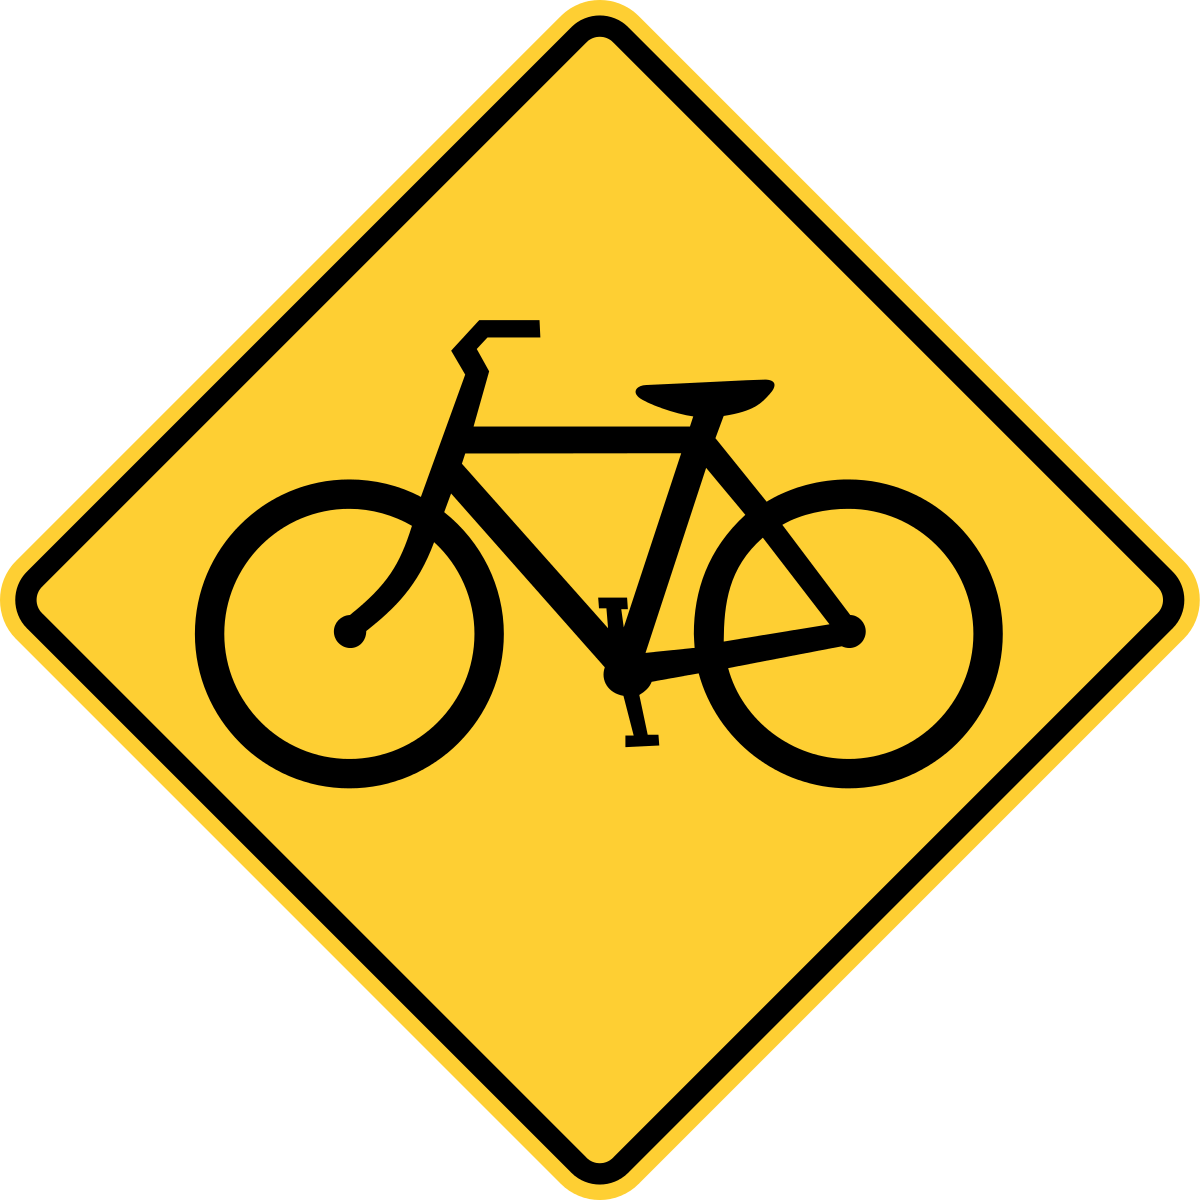 Bicycle Warning Sign PNG image